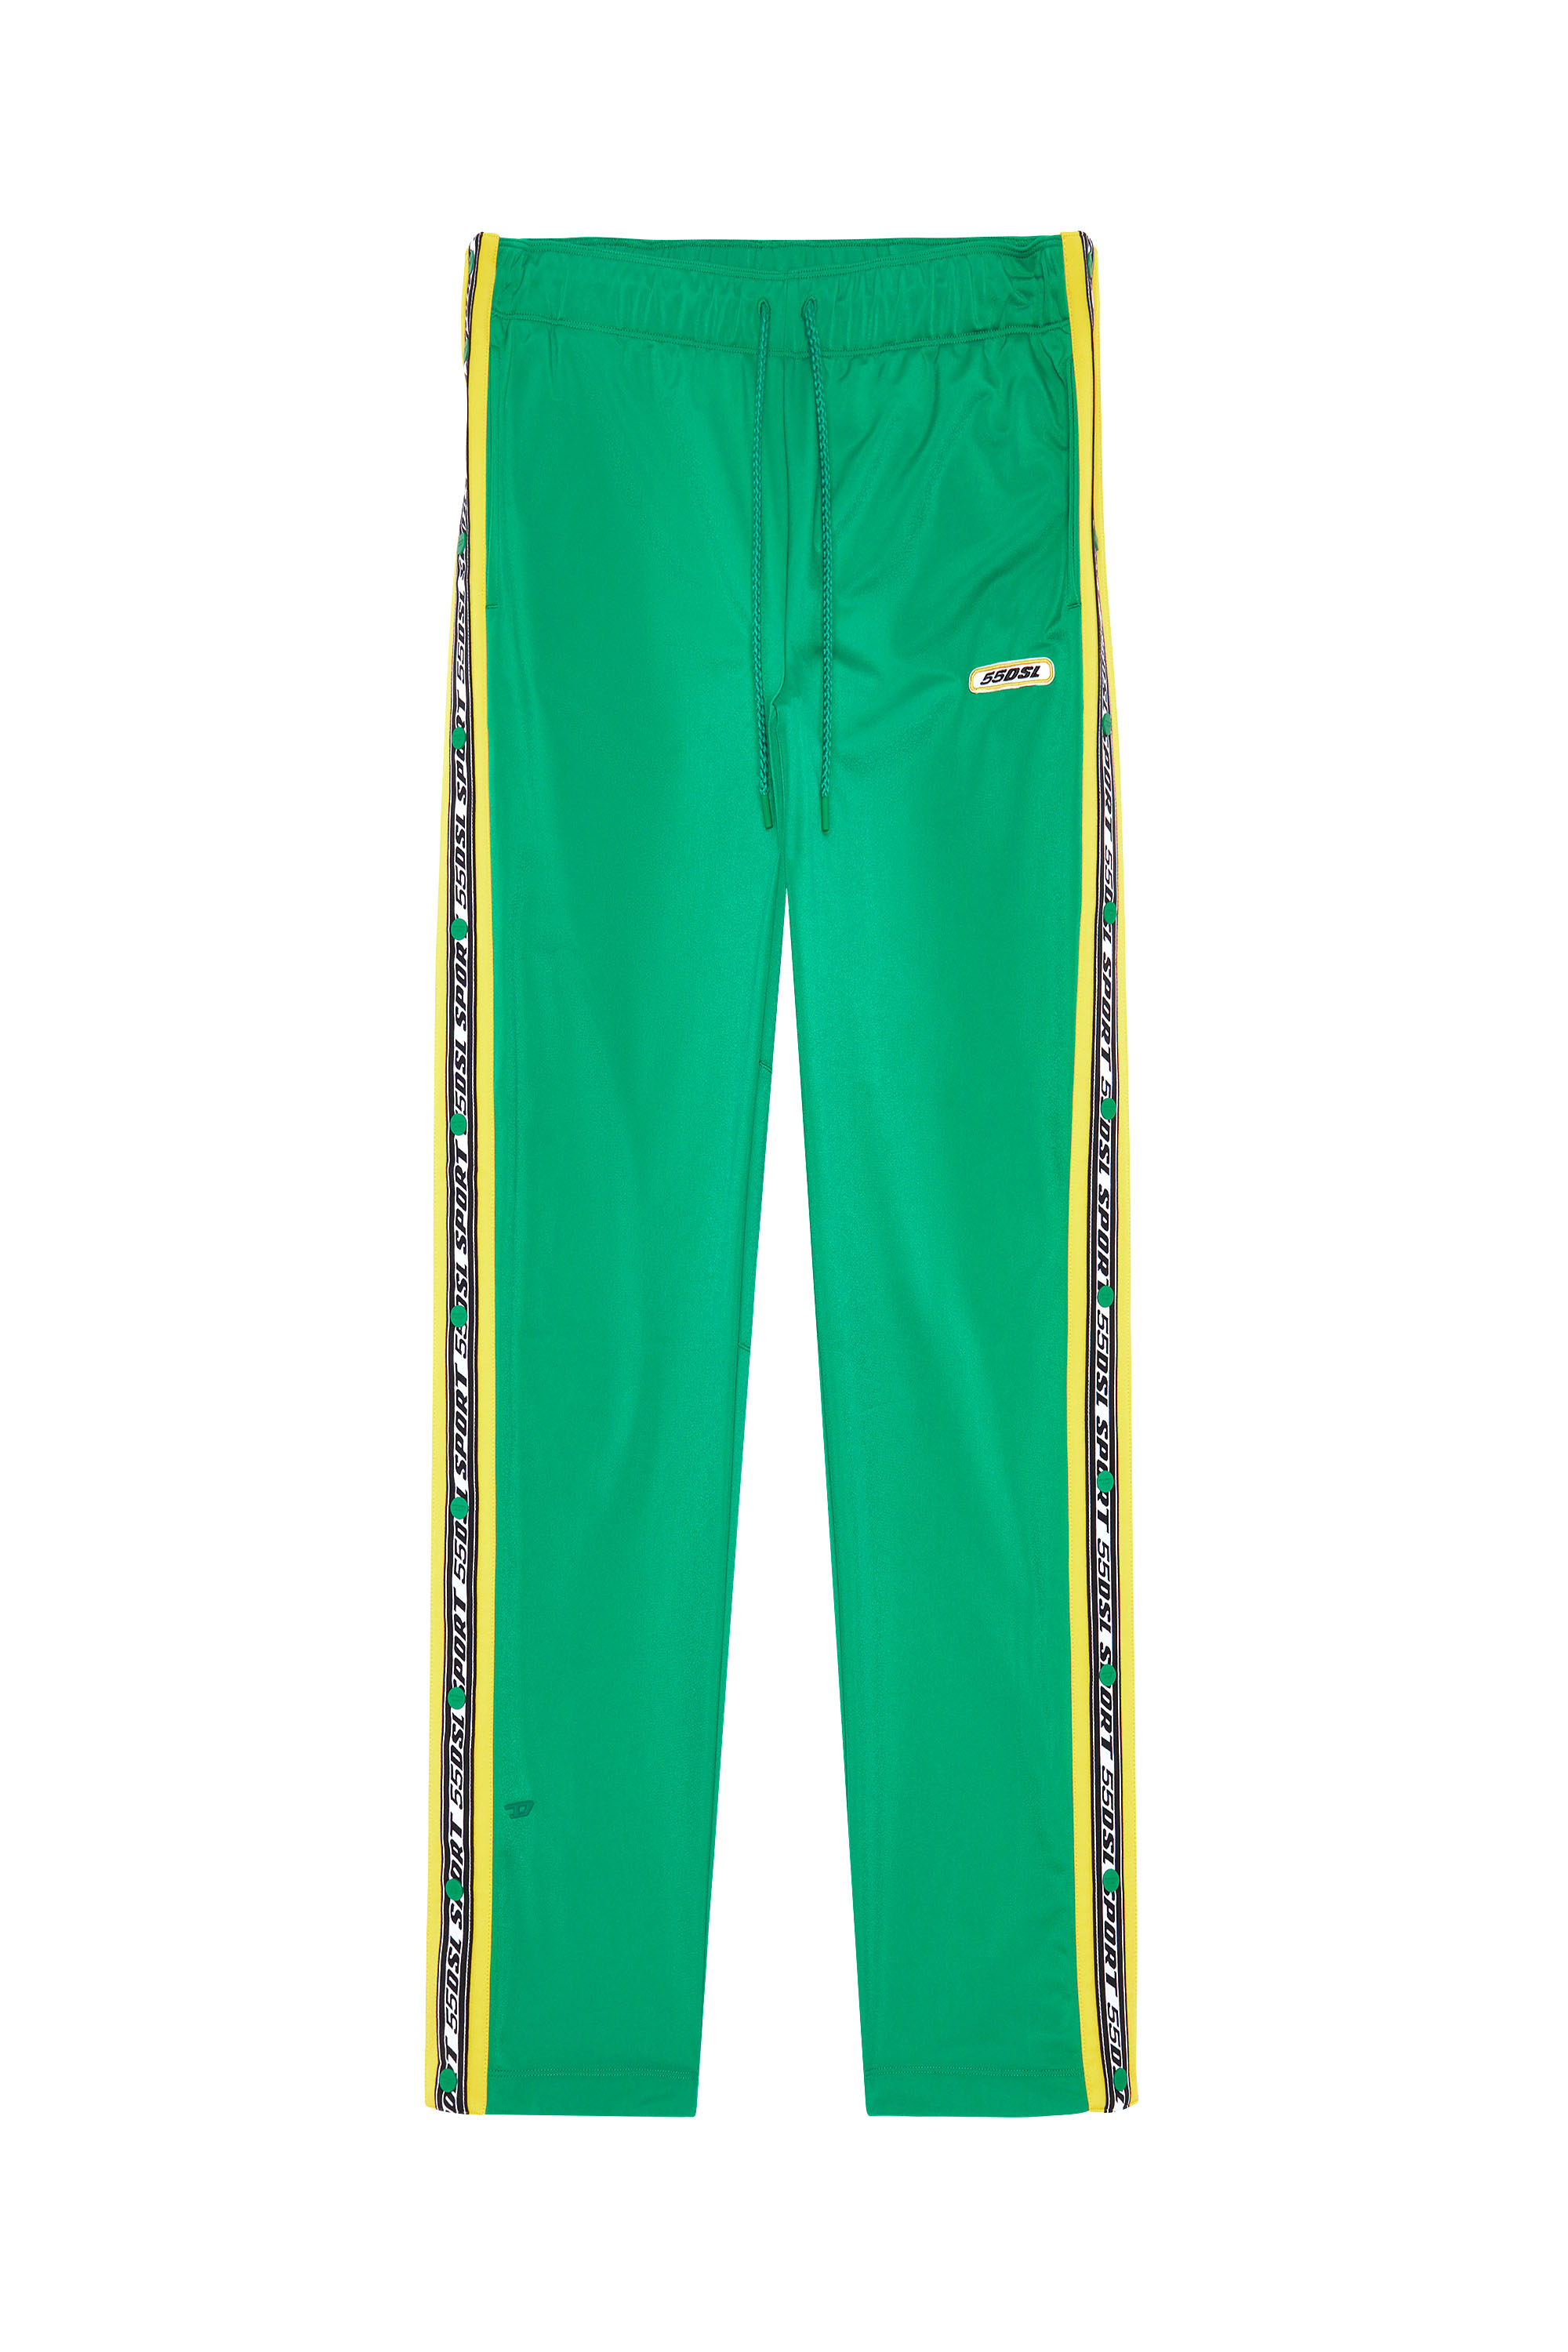 AMSB-YOXOR-WT10, Green - Pants